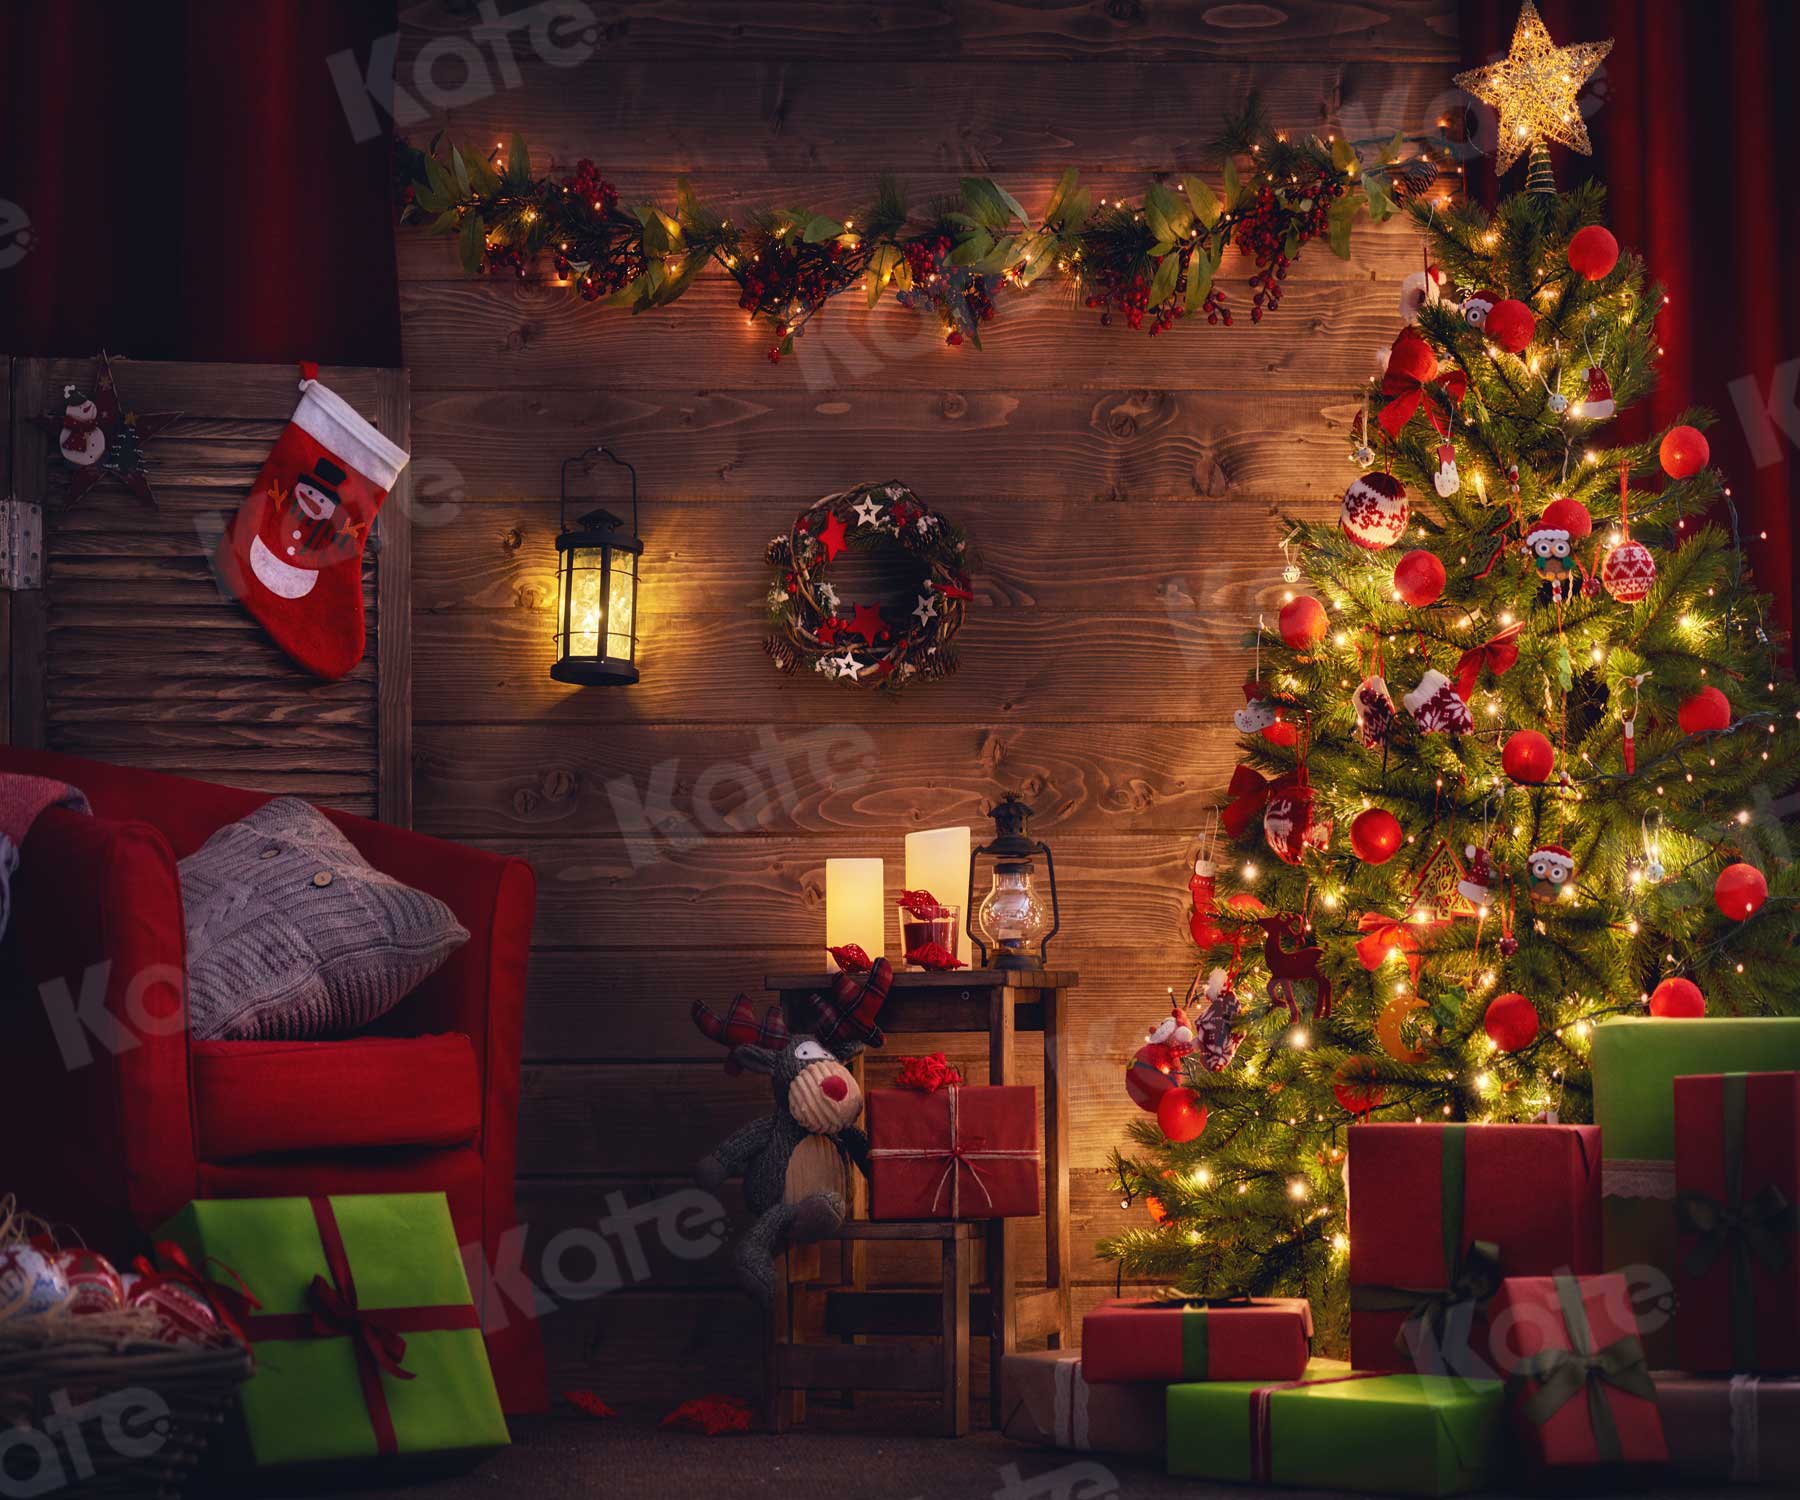 Kate santa's workshop Light Christmas Backdrop